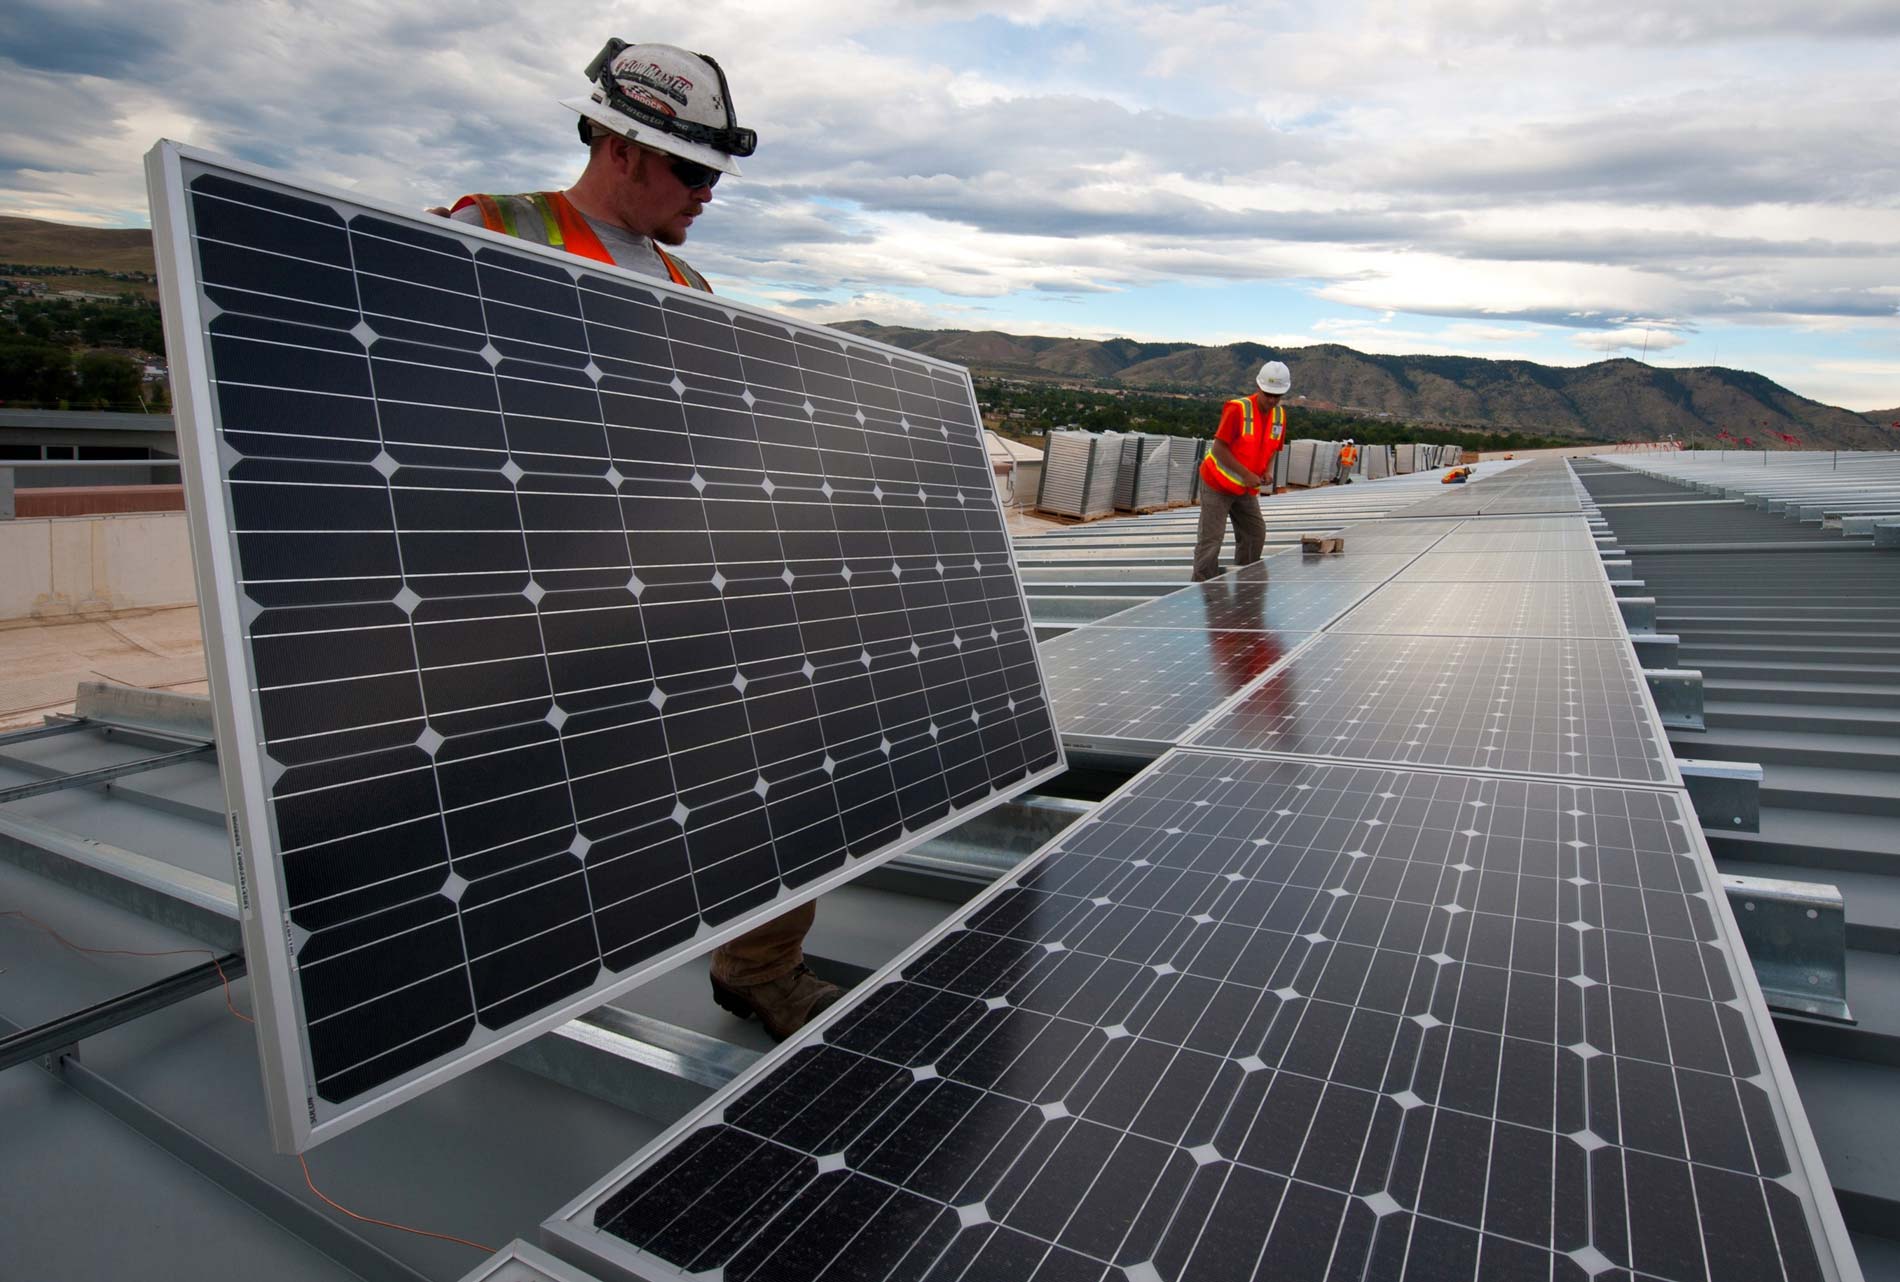 Details About City of Cincinnati's Massive Solar Array Announced Creekwood Energy